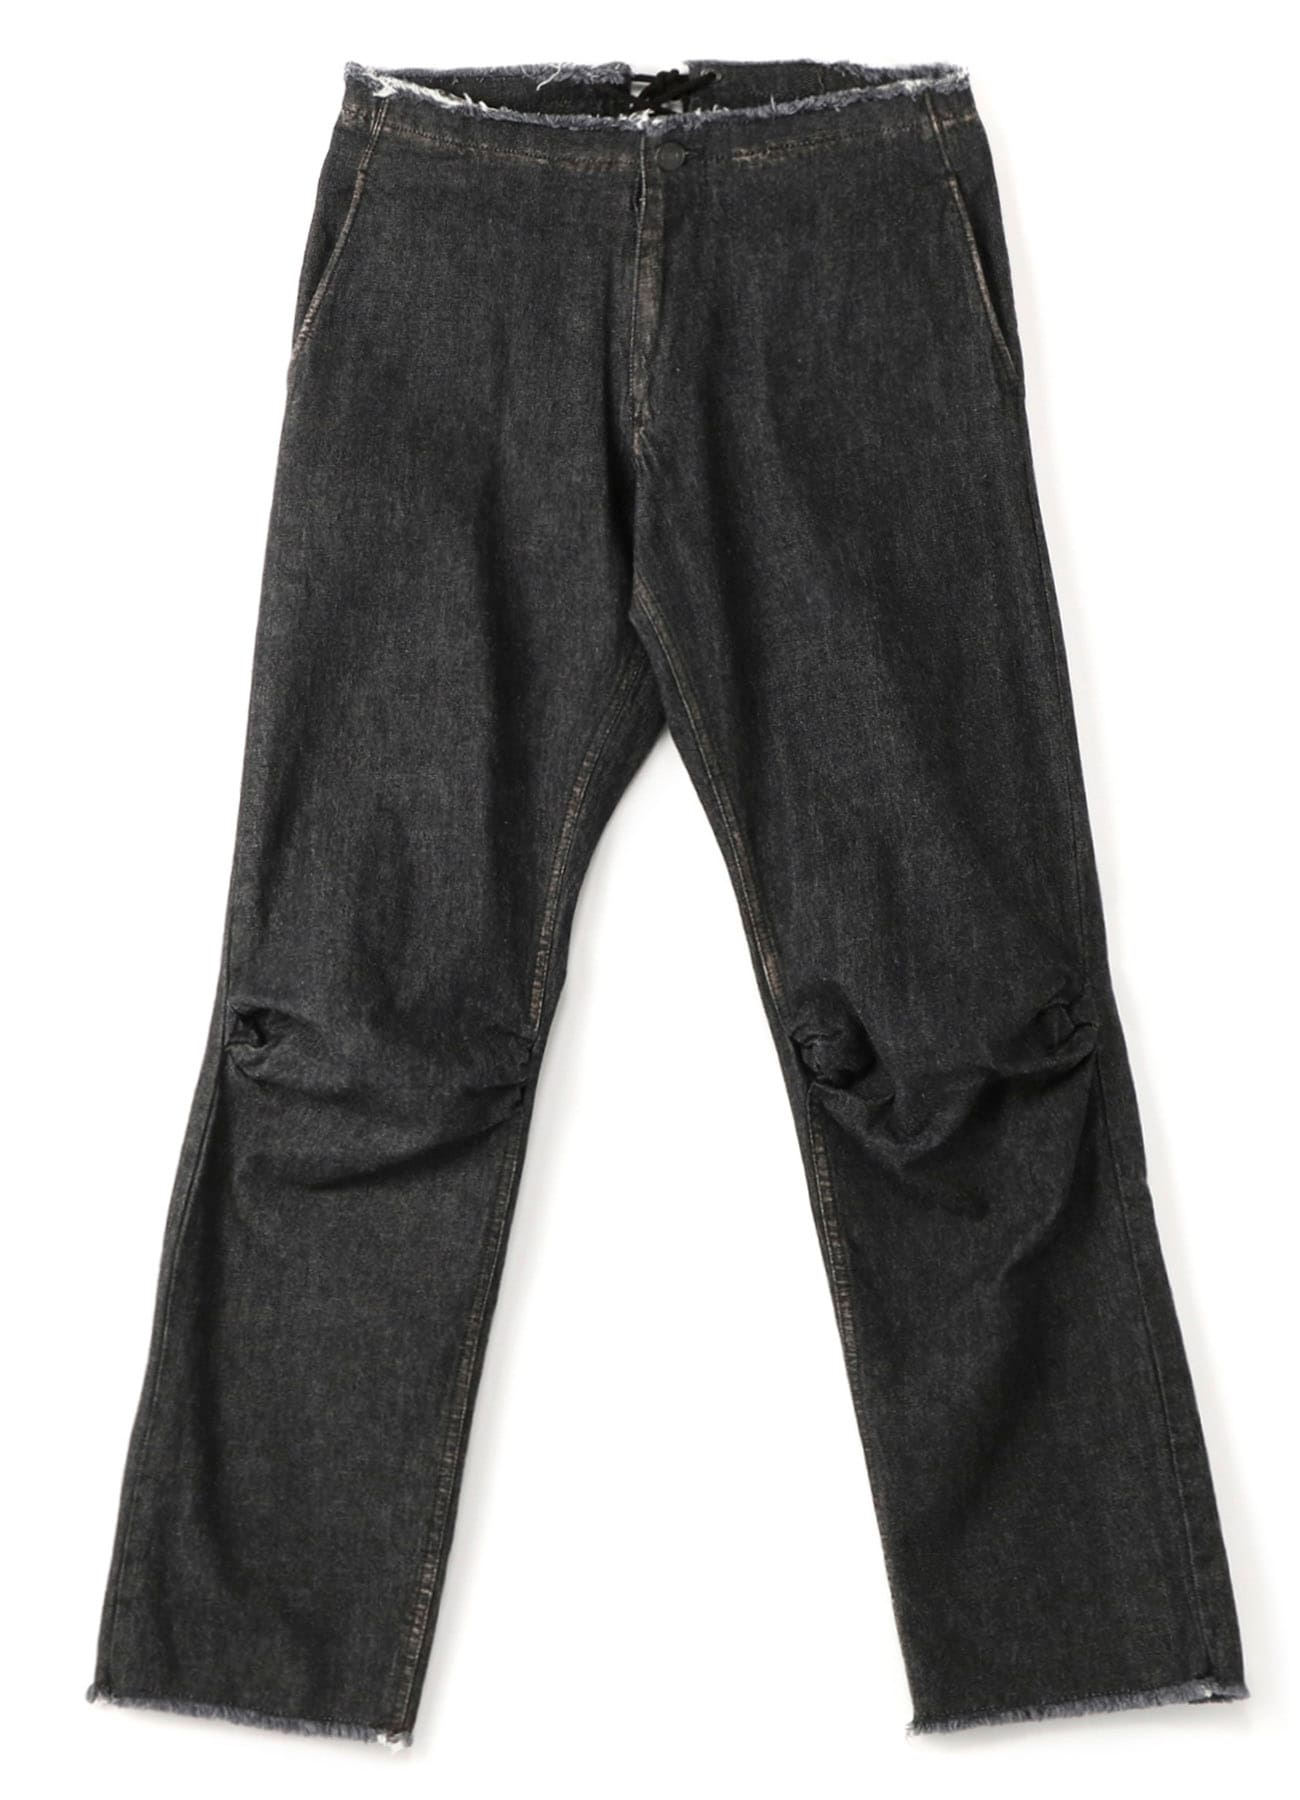 10oz Selvedge Knee Square Machi Slim Pants (XS Black): Vintage 